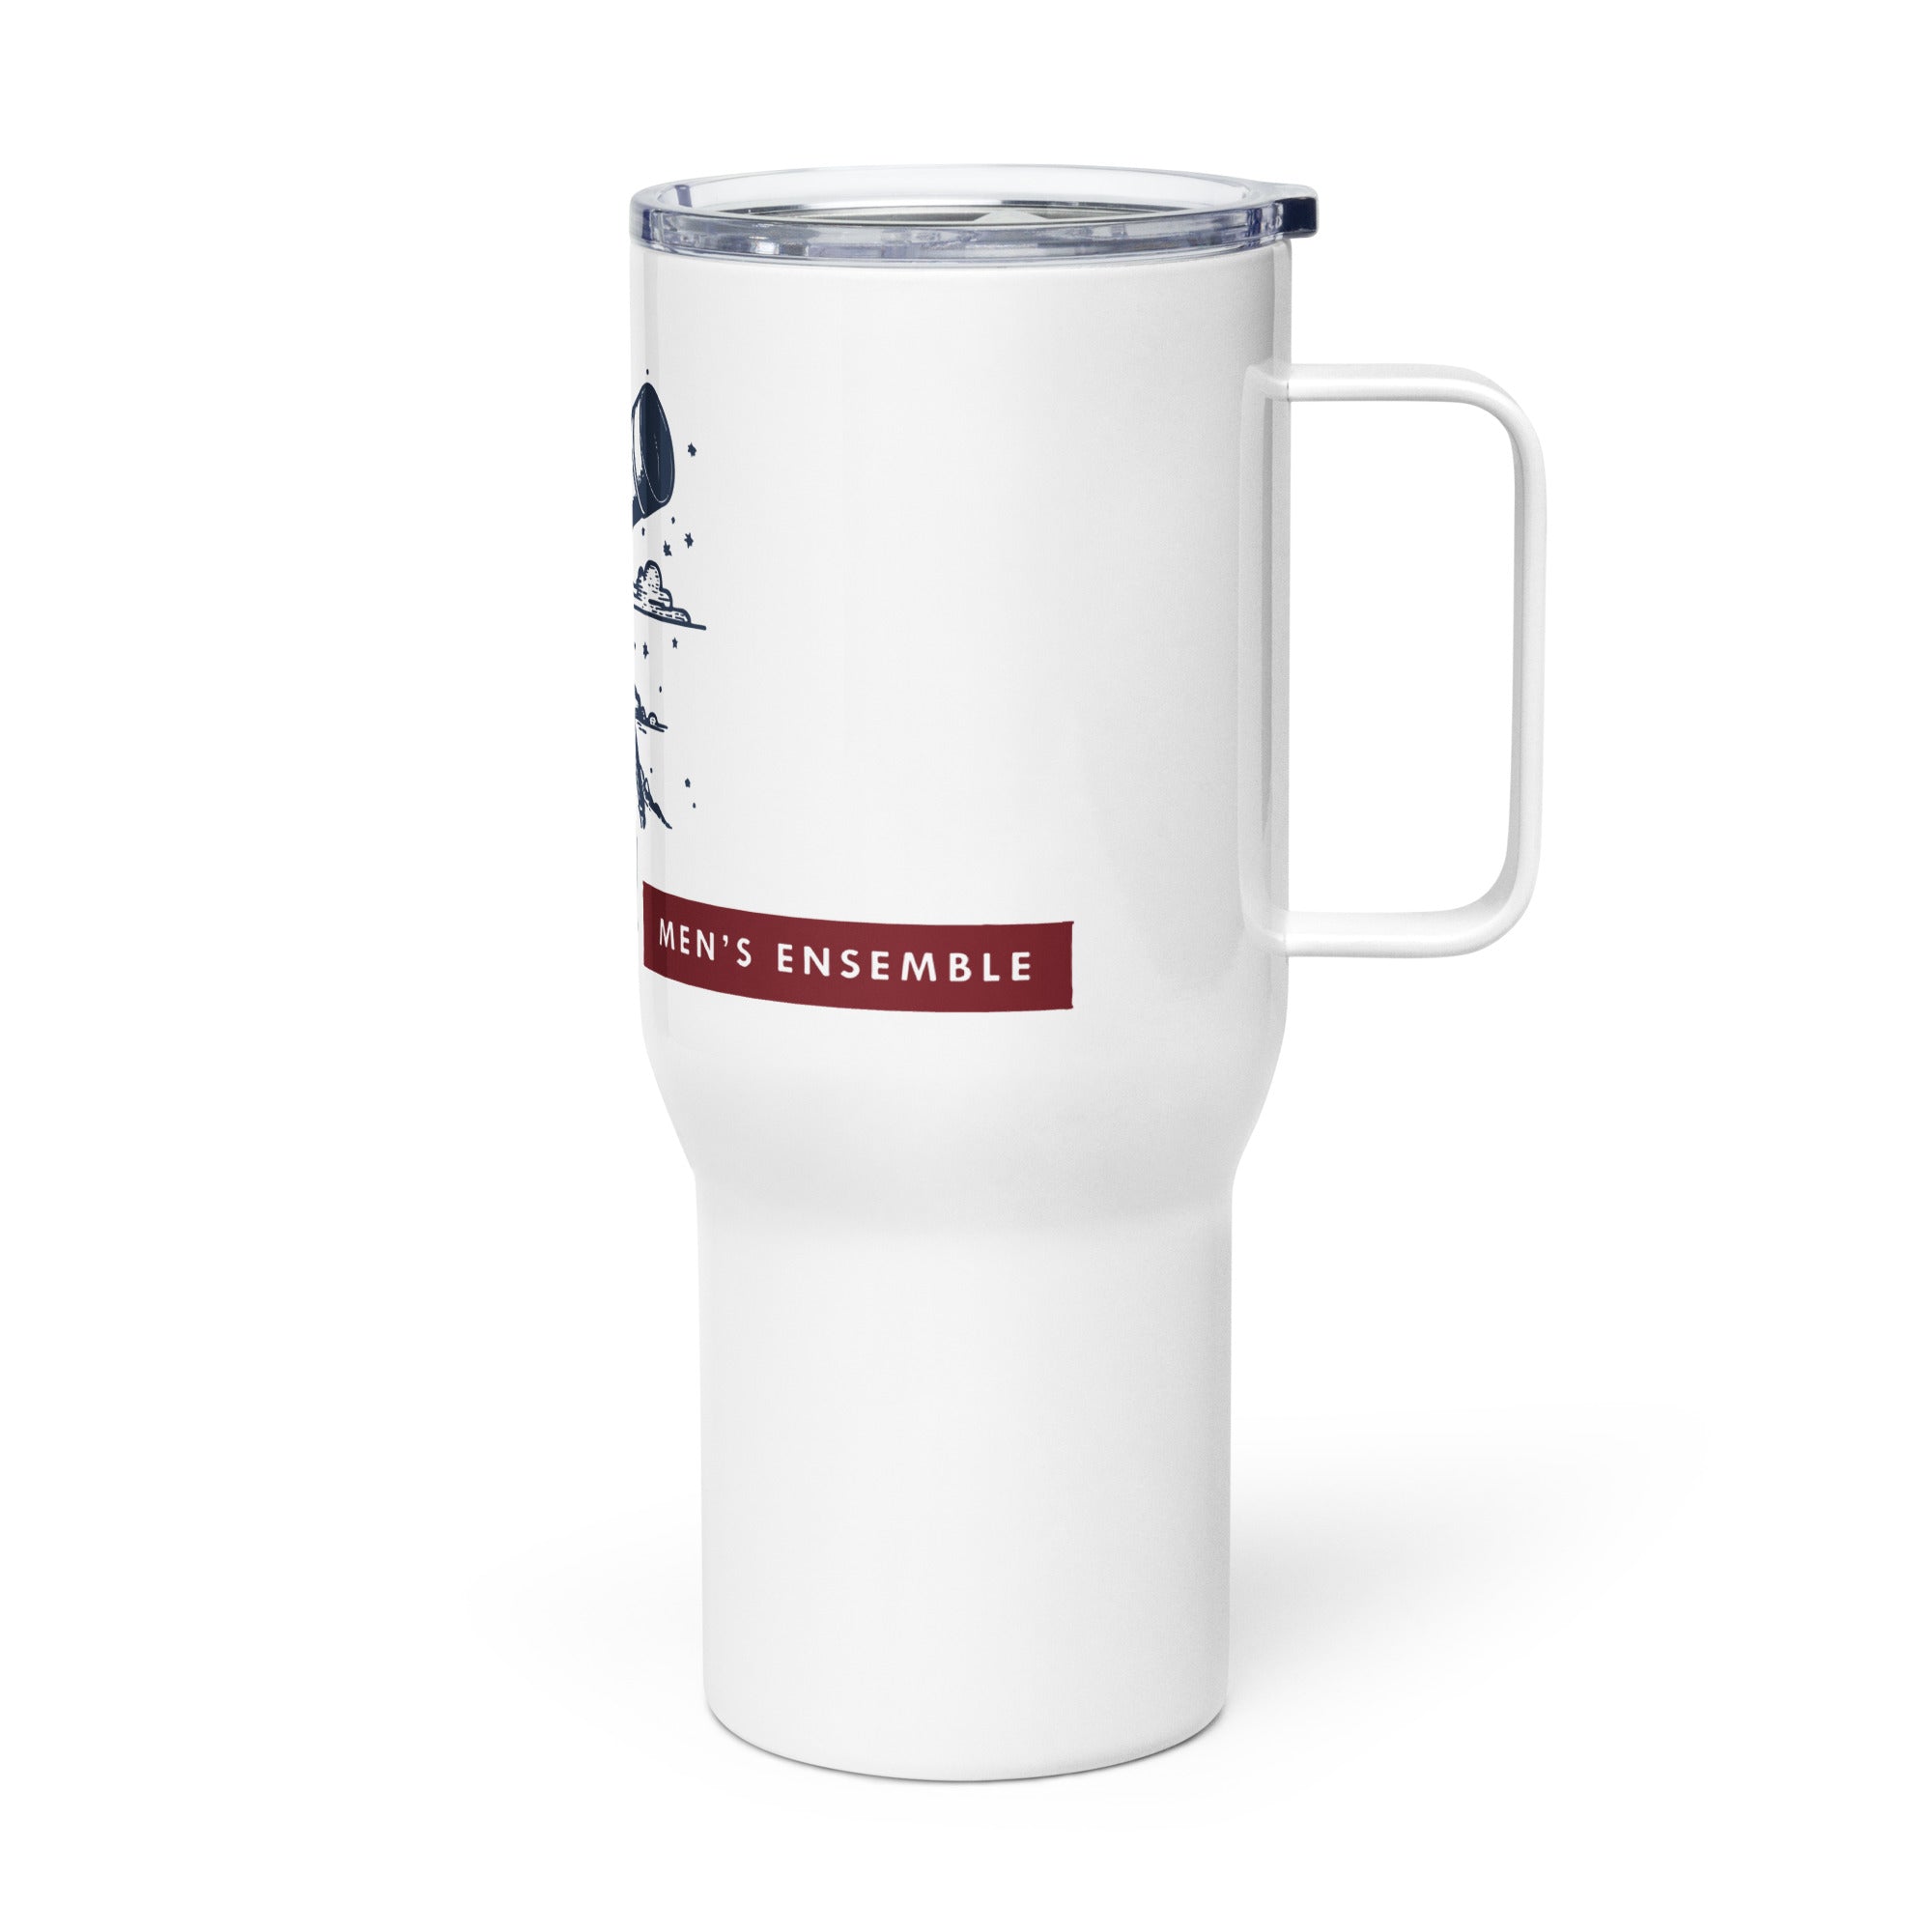 CME Travel mug with a handle v1